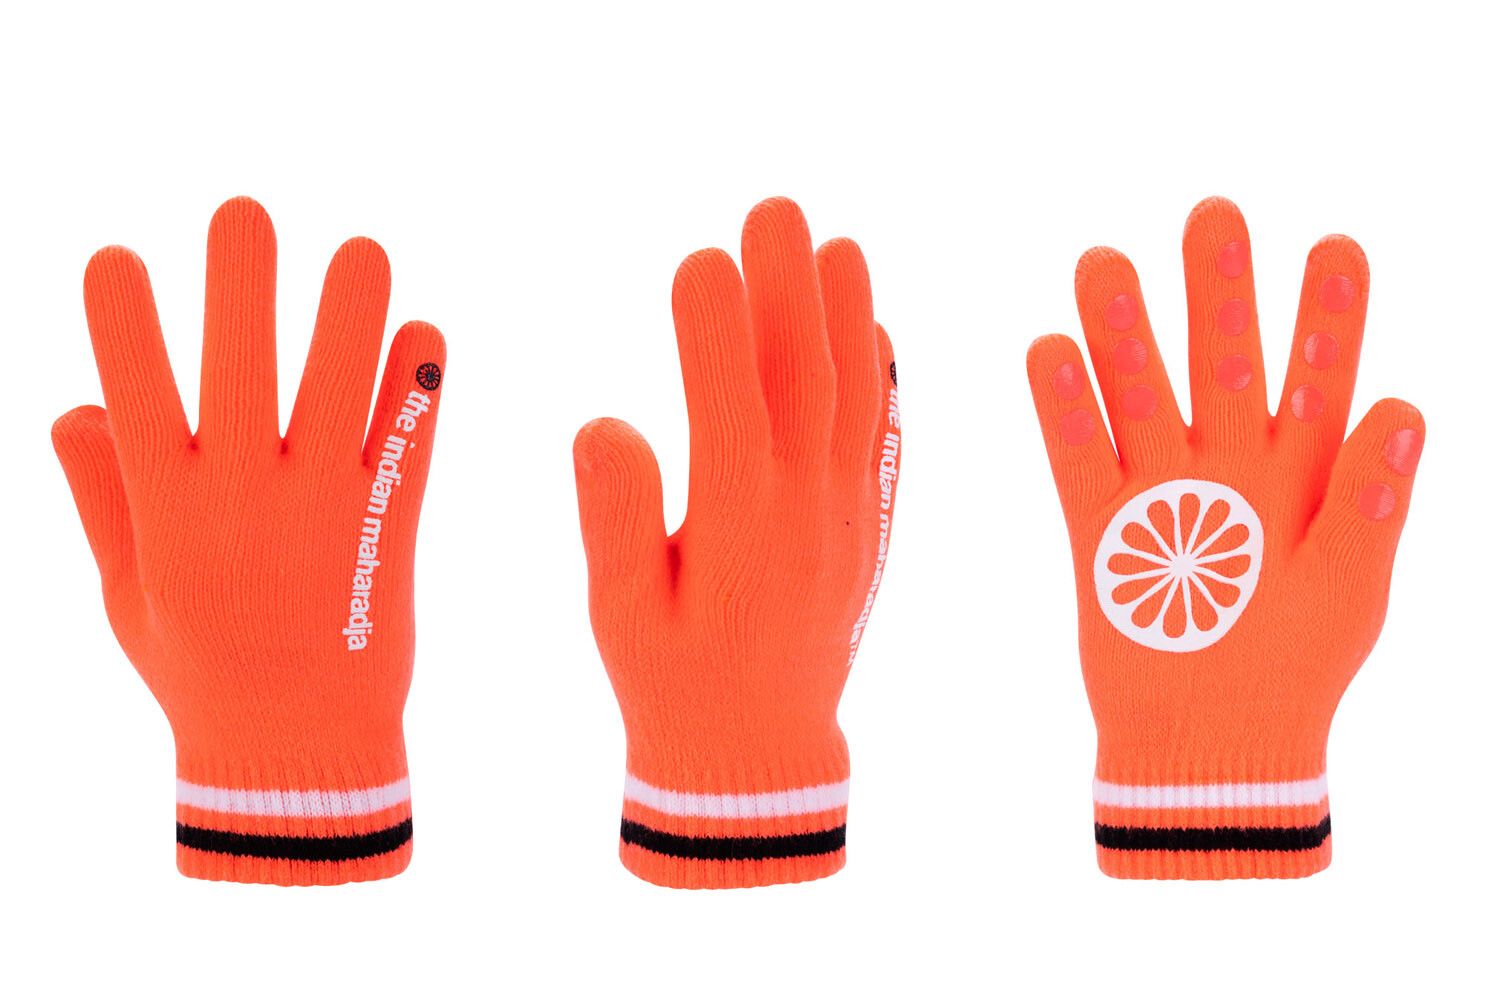 The Indian Maharajah Winter Gloves